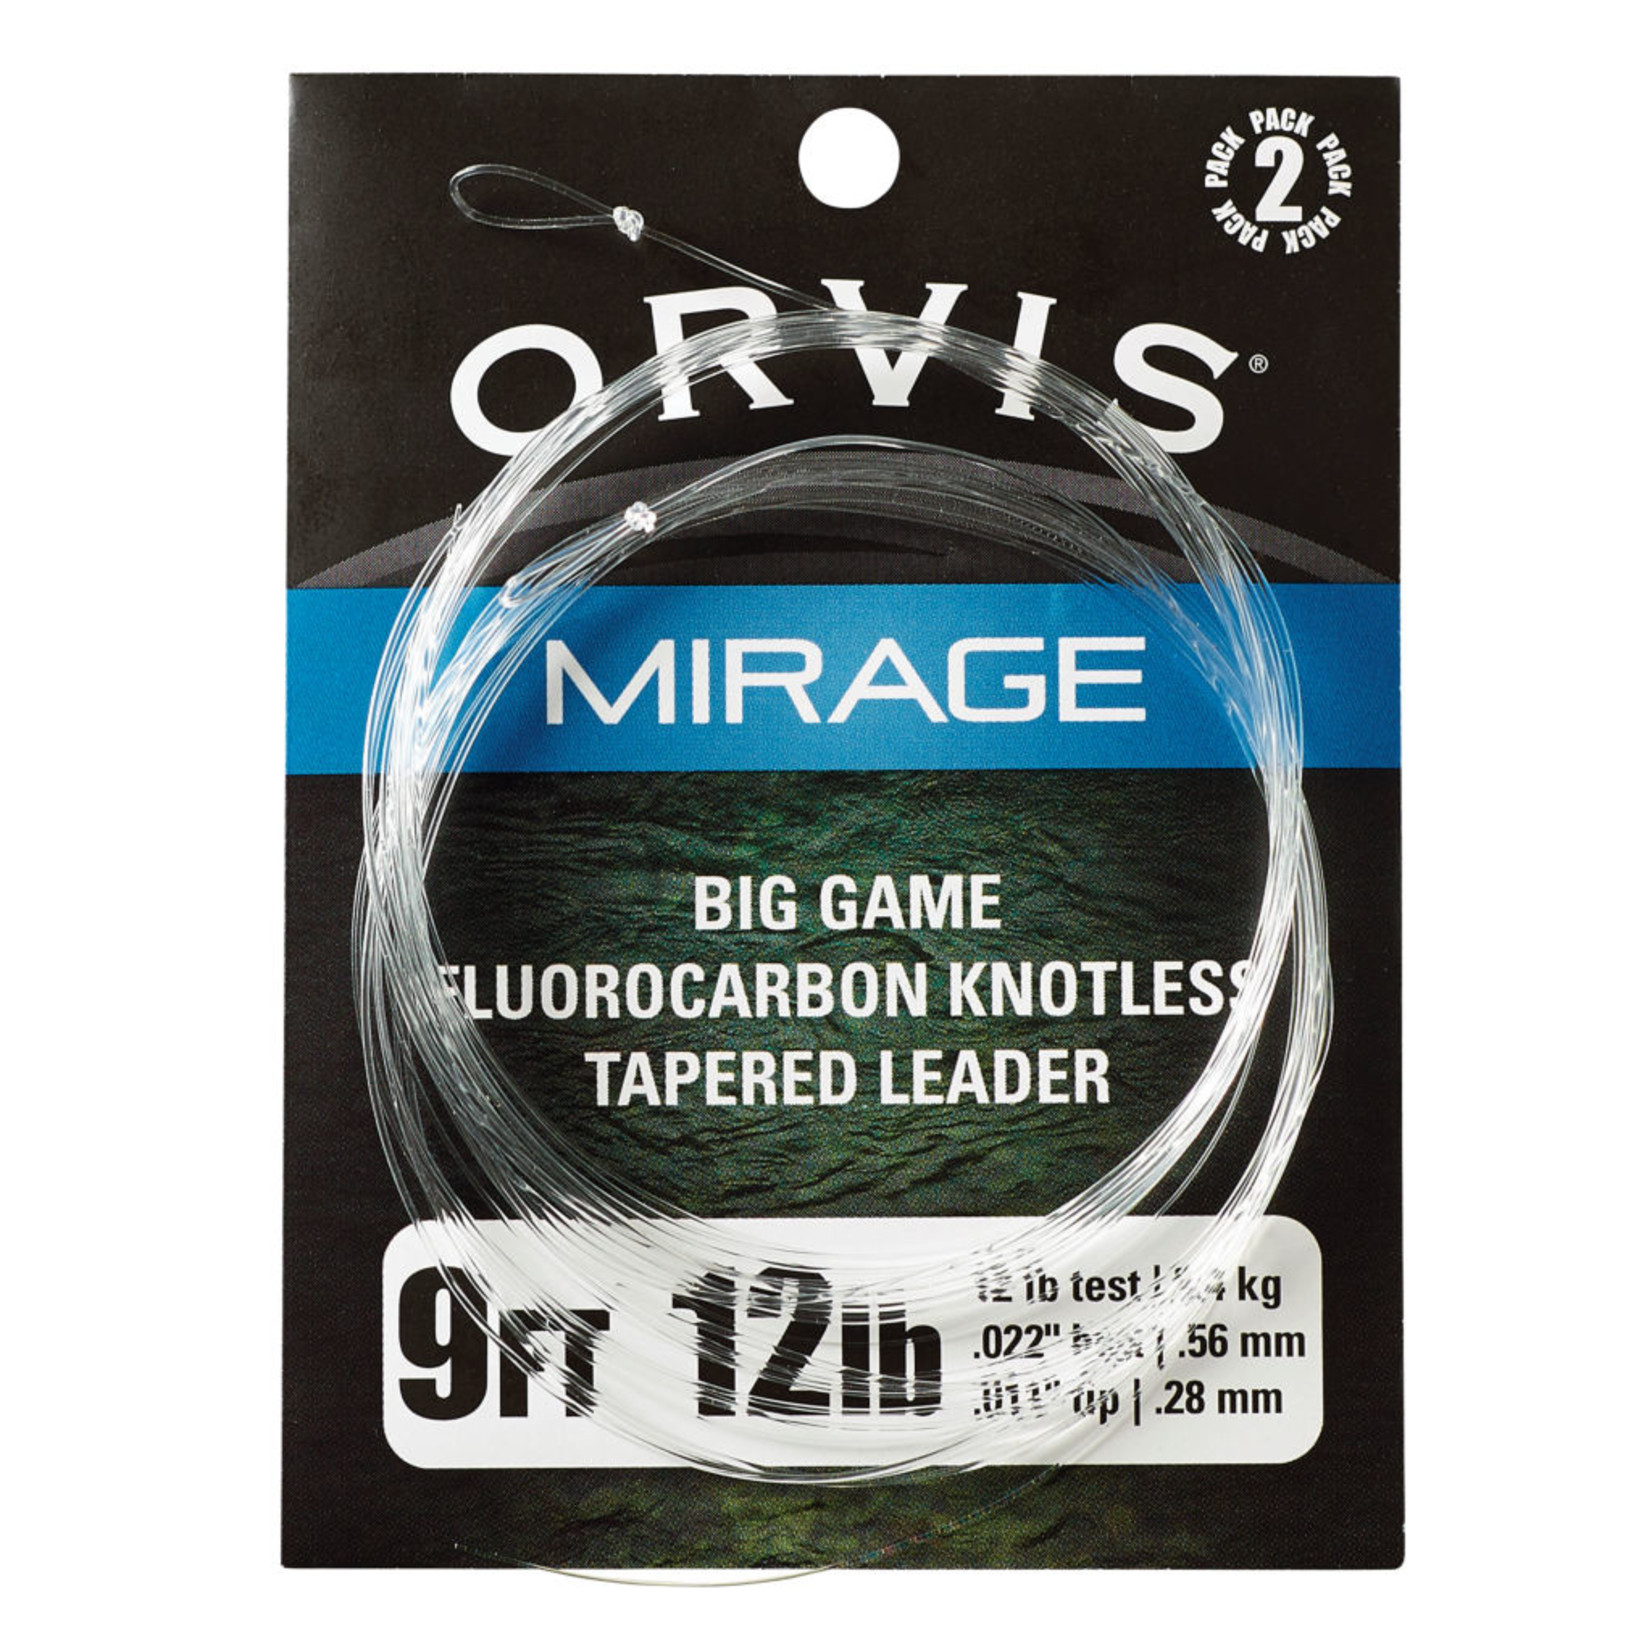 Orvis Mirage Big Game Fluorocarbon Leaders